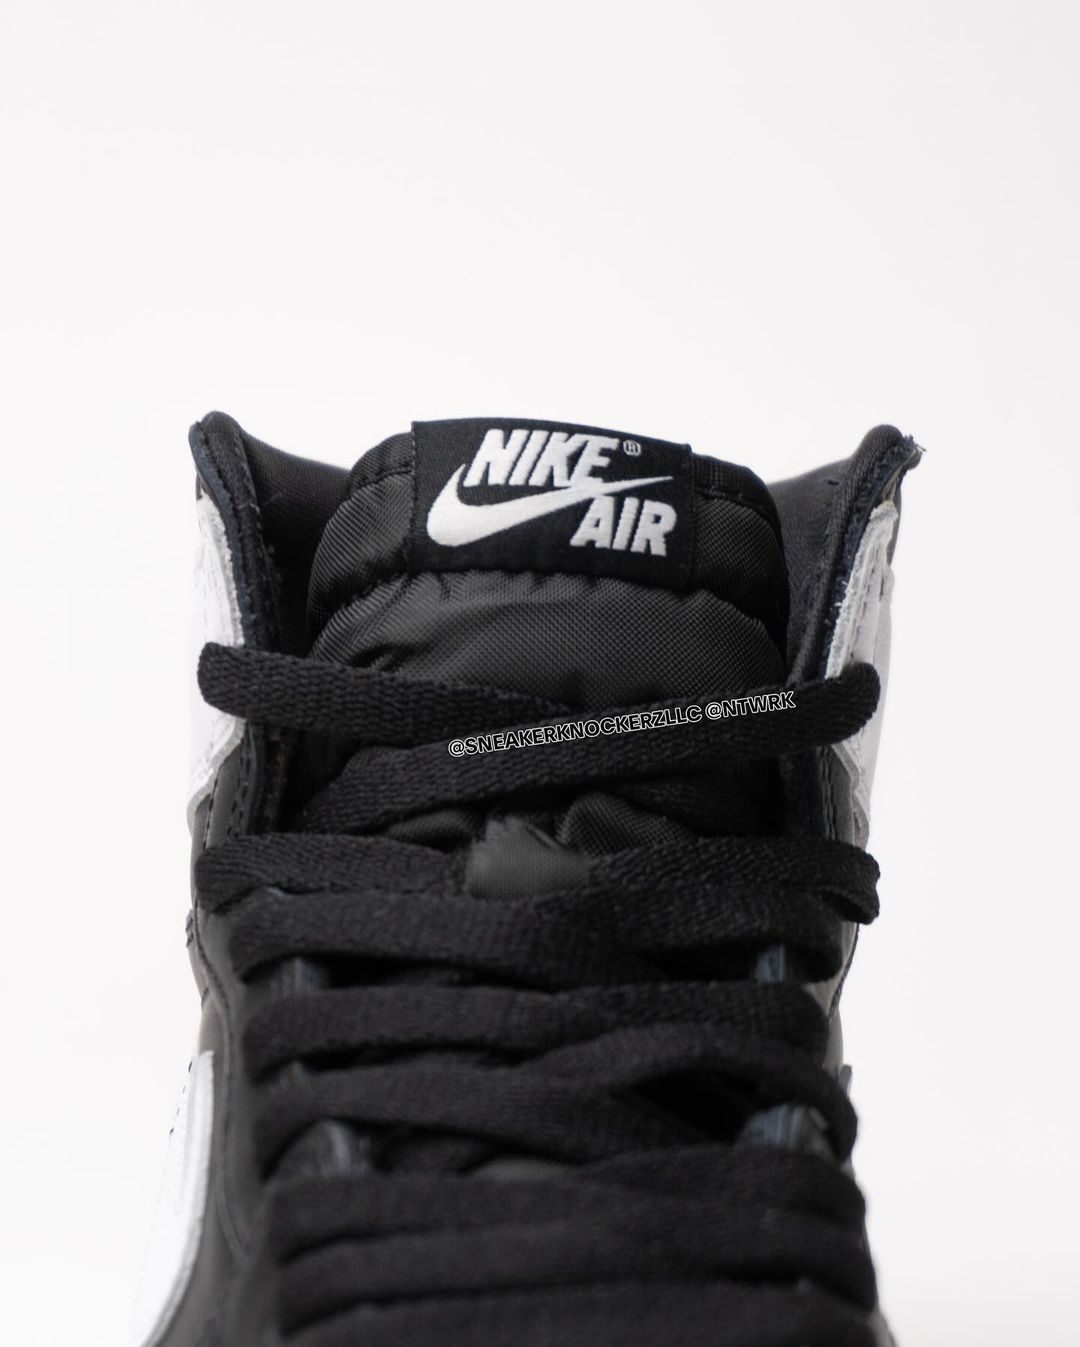 Supreme Nike SB Air Darwin Low Black FQ3000-001 Release